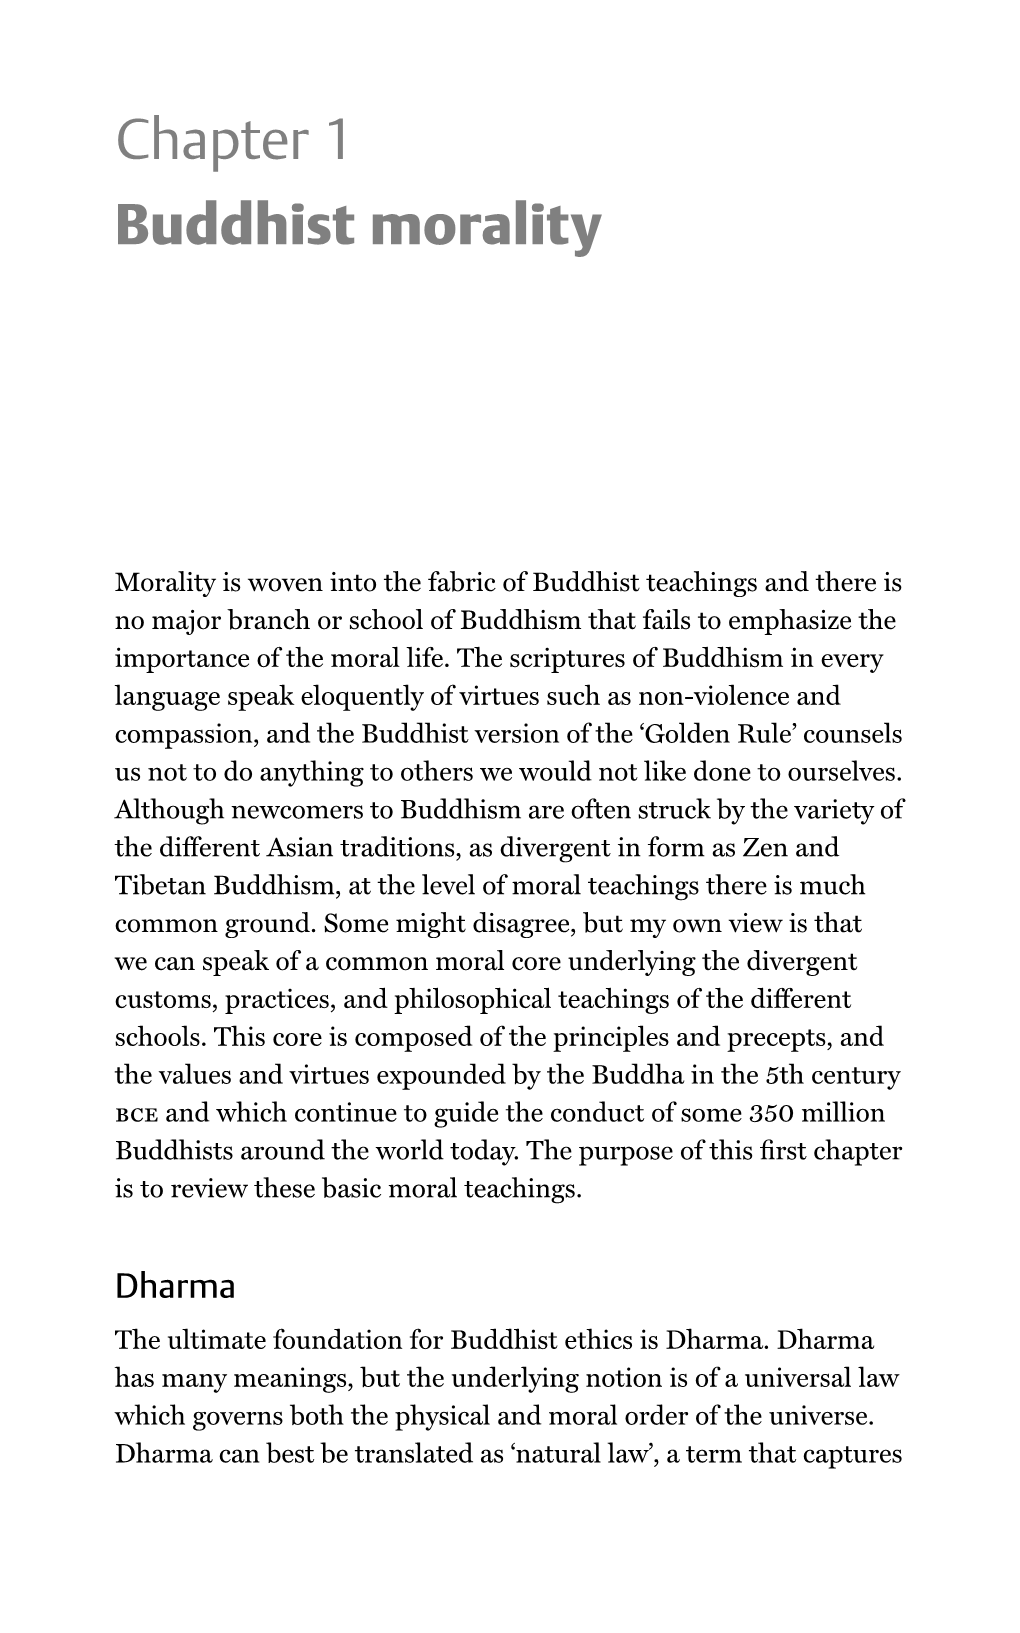 Chapter 1 Buddhist Morality